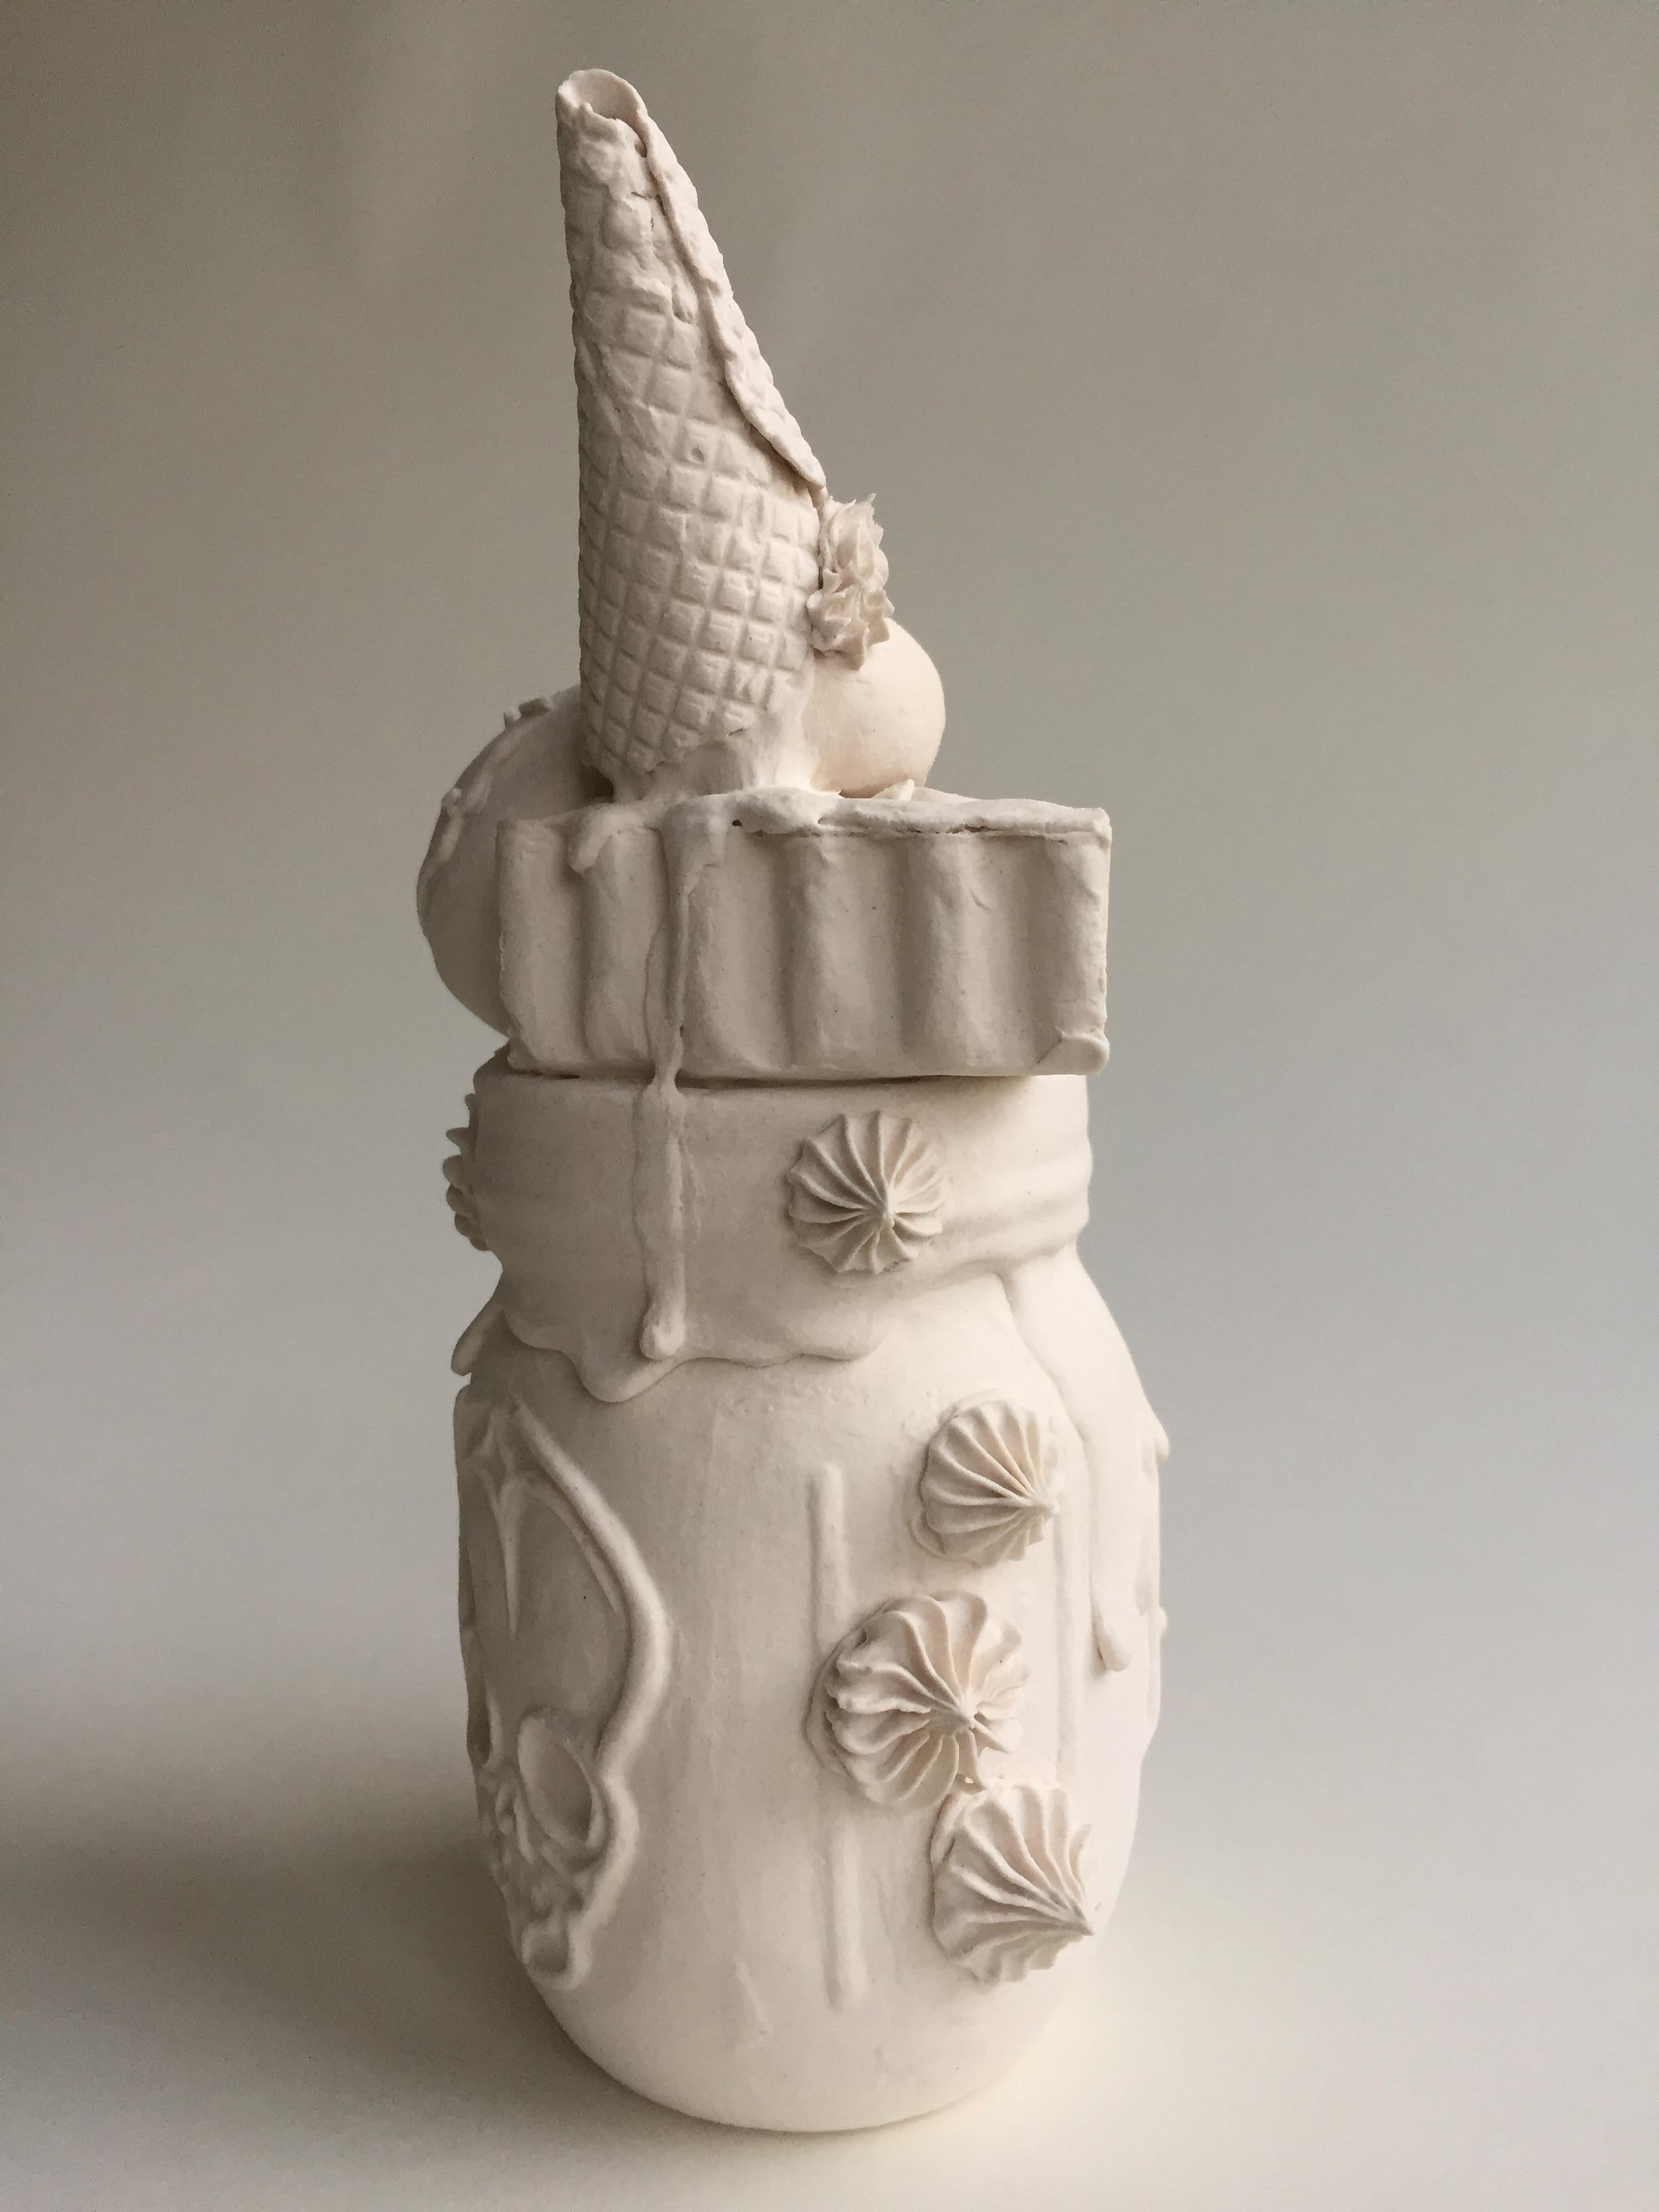 Ice cream float jar V - Contemporary Sculpture by Jacqueline Tse